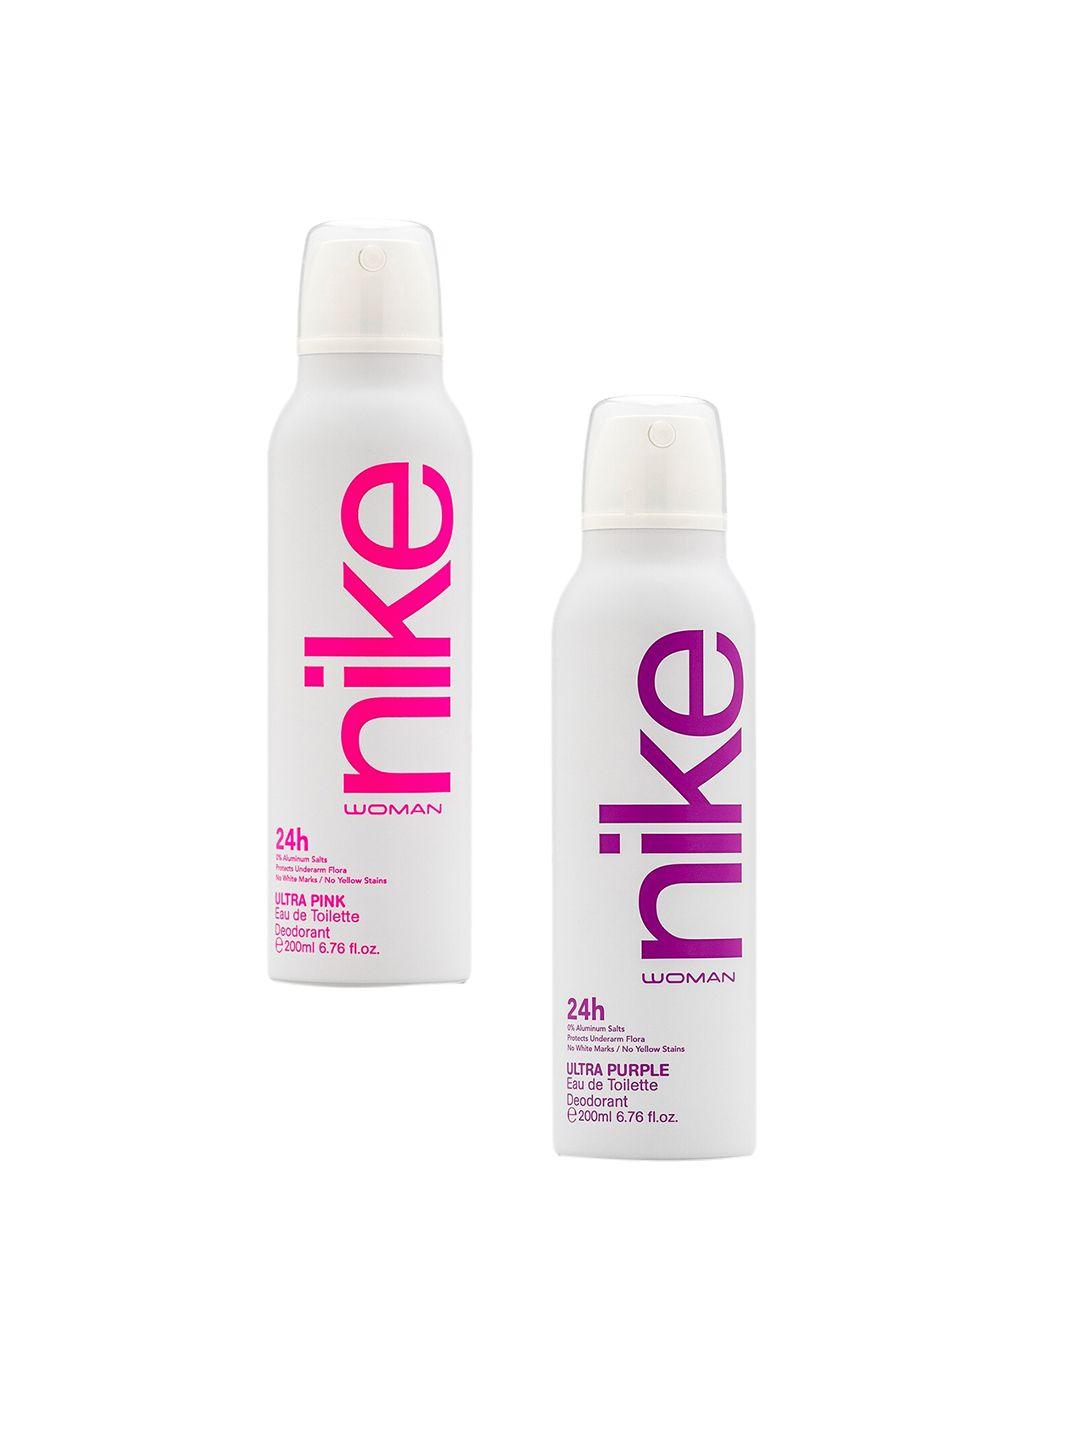 nike-women-pack-of-2-deodorant-200ml-each